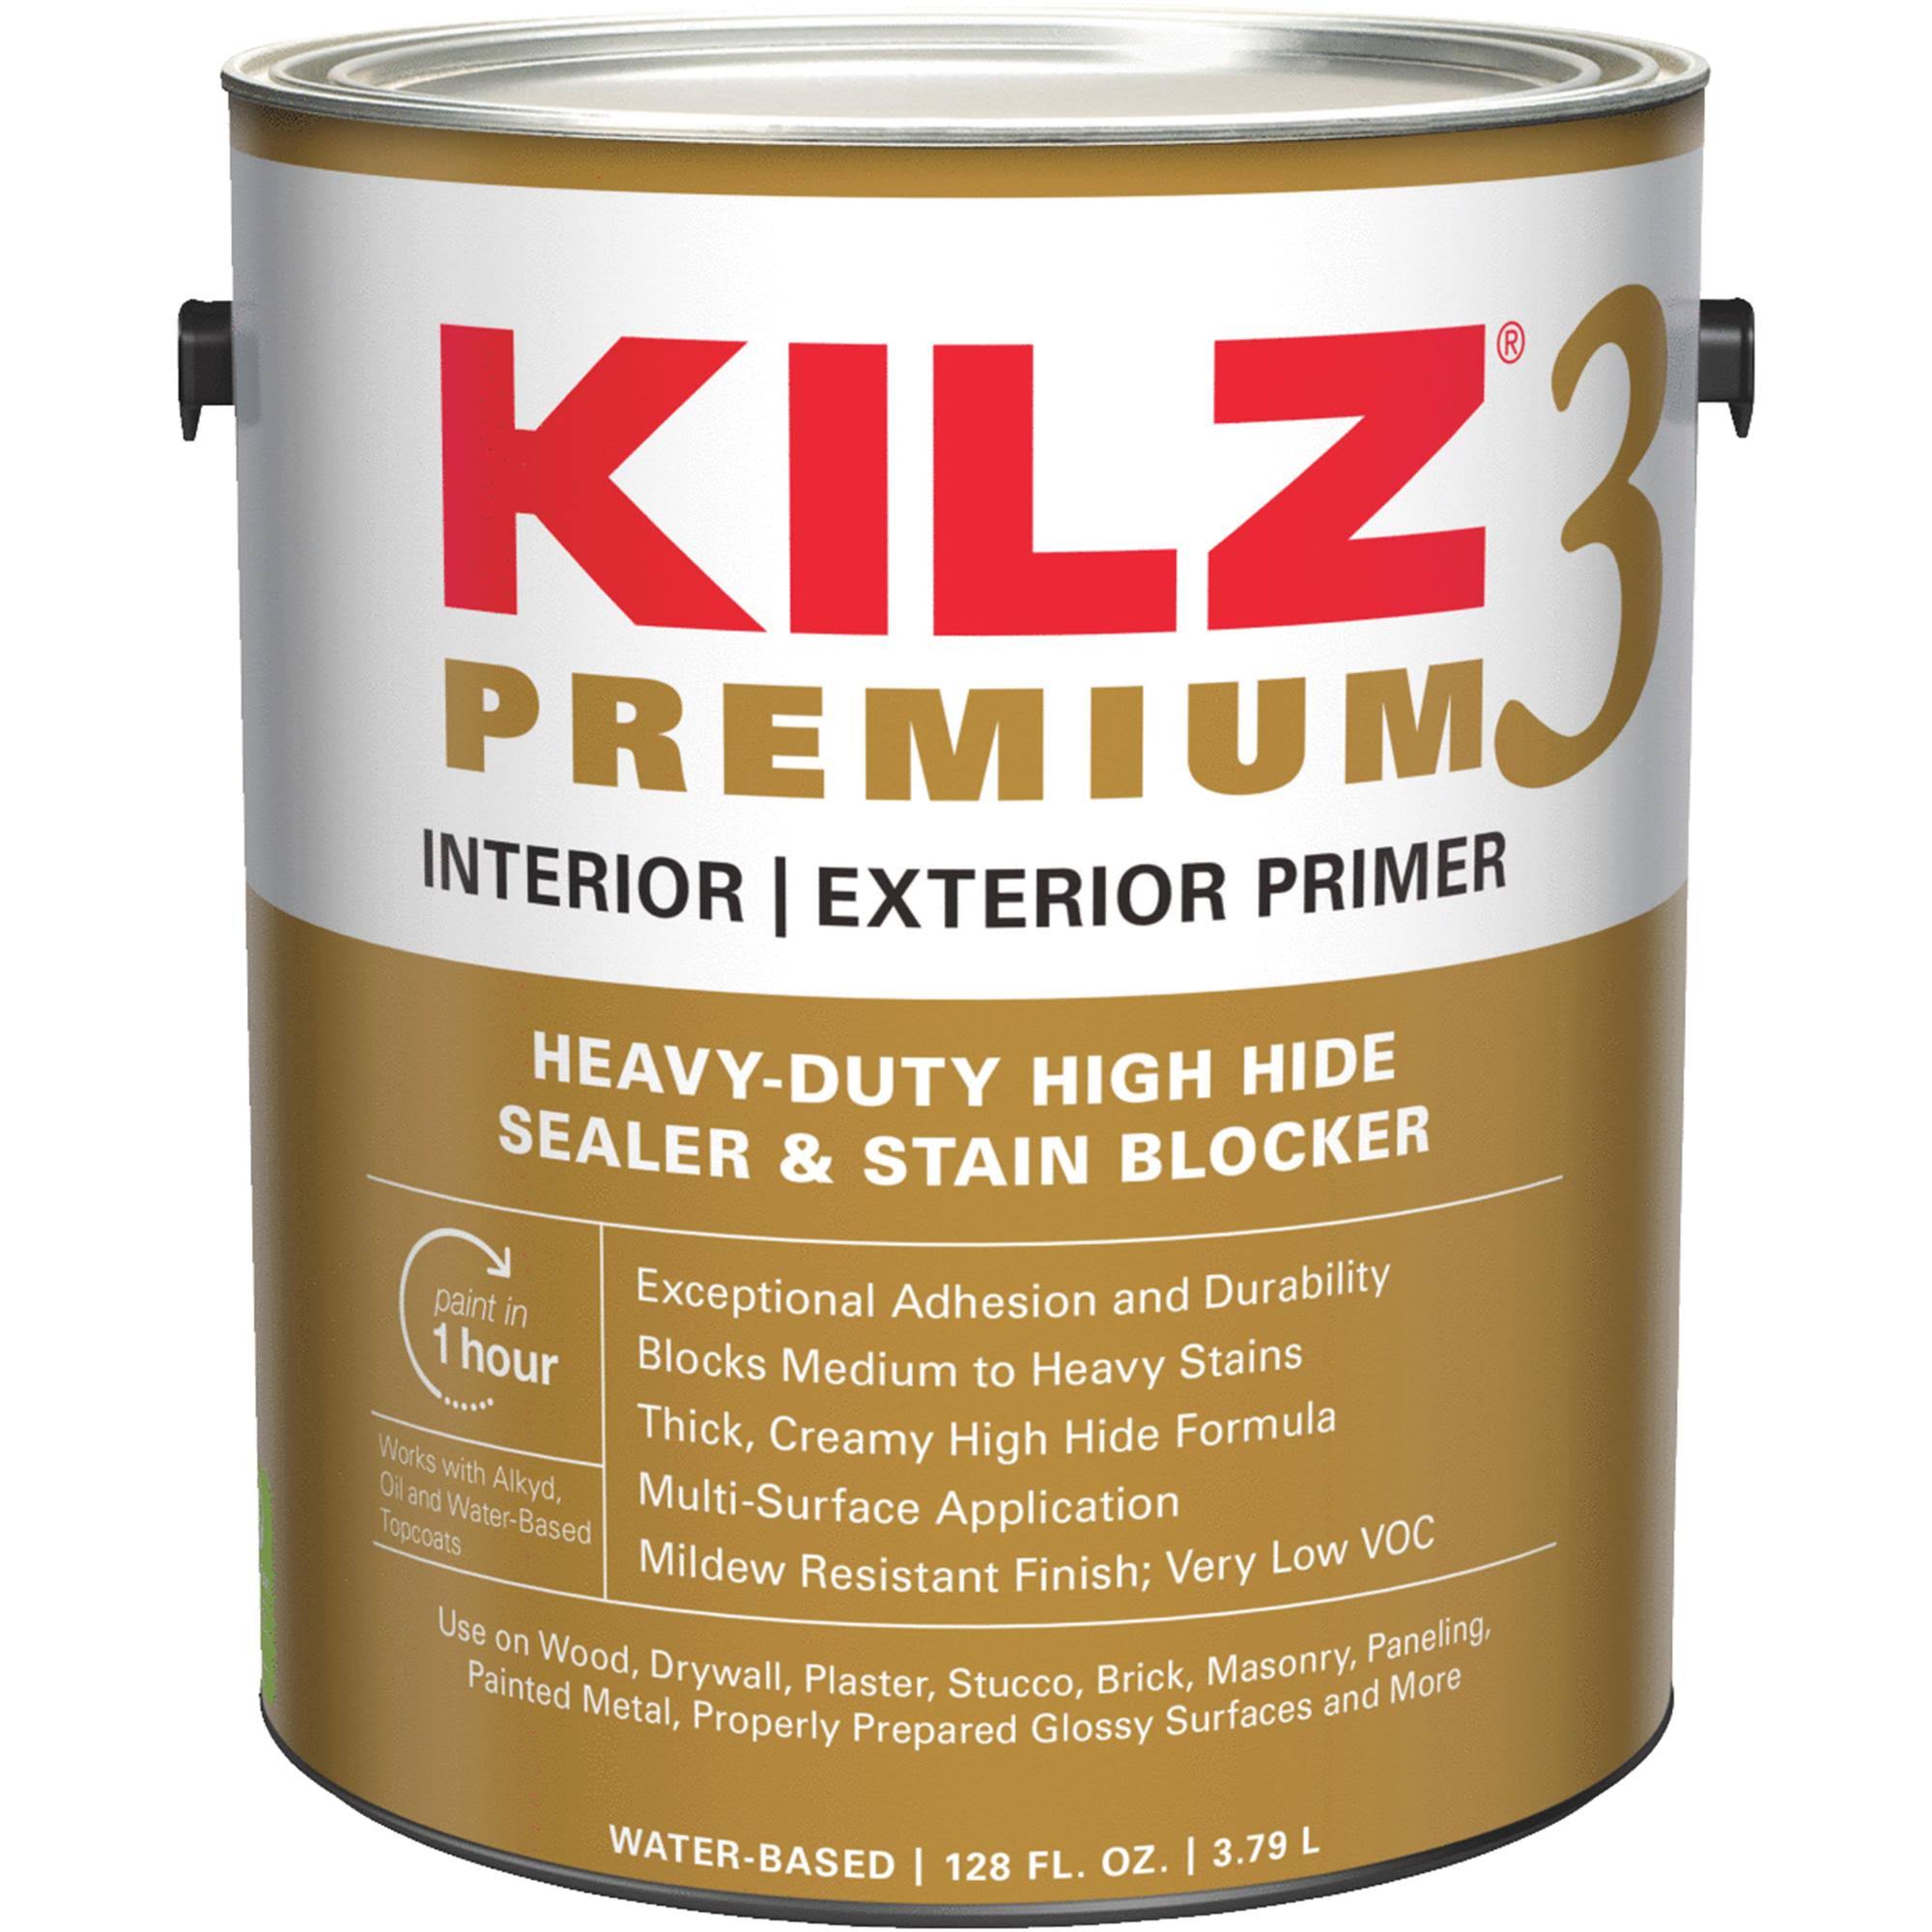 KILZ Premium High-Hide Stain Blocking Interior Exterior Latex Primer Sealer - White, 1 Gallon